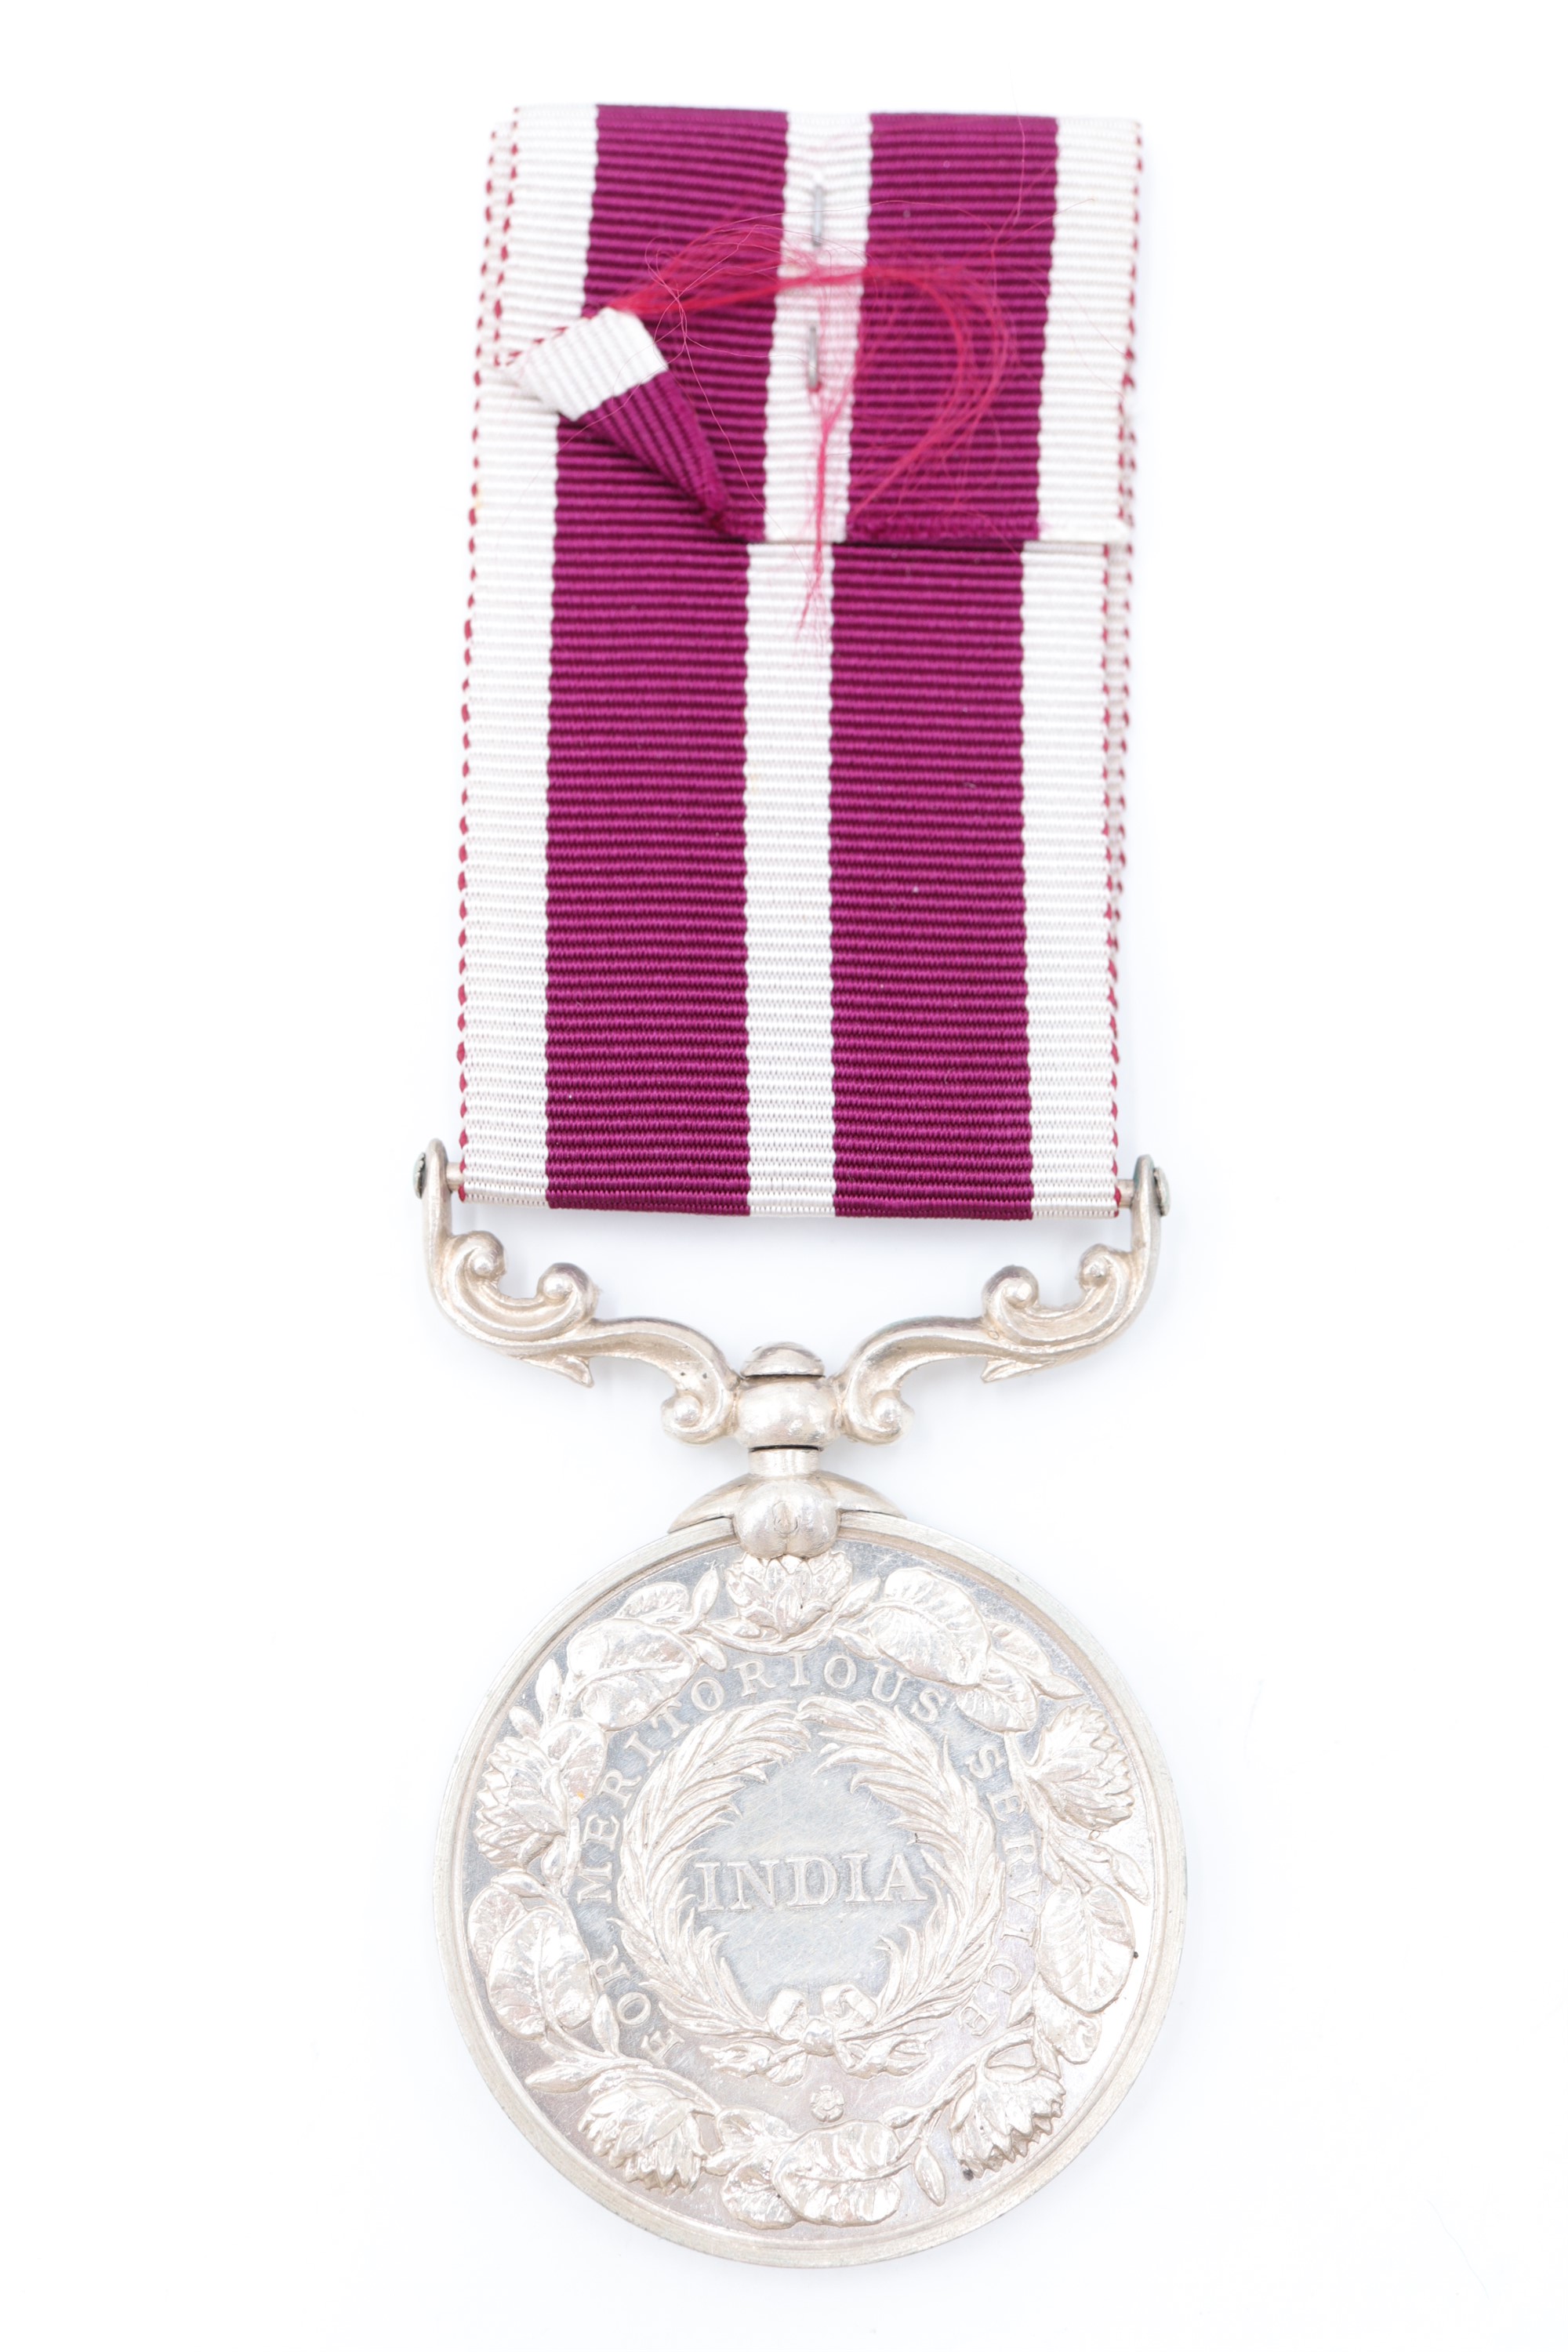 A George VI Indian Meritorious Service Medal to 201 Coy Hav Maj Jakub Khan, 10-1 Punjab Regiment - Image 2 of 8